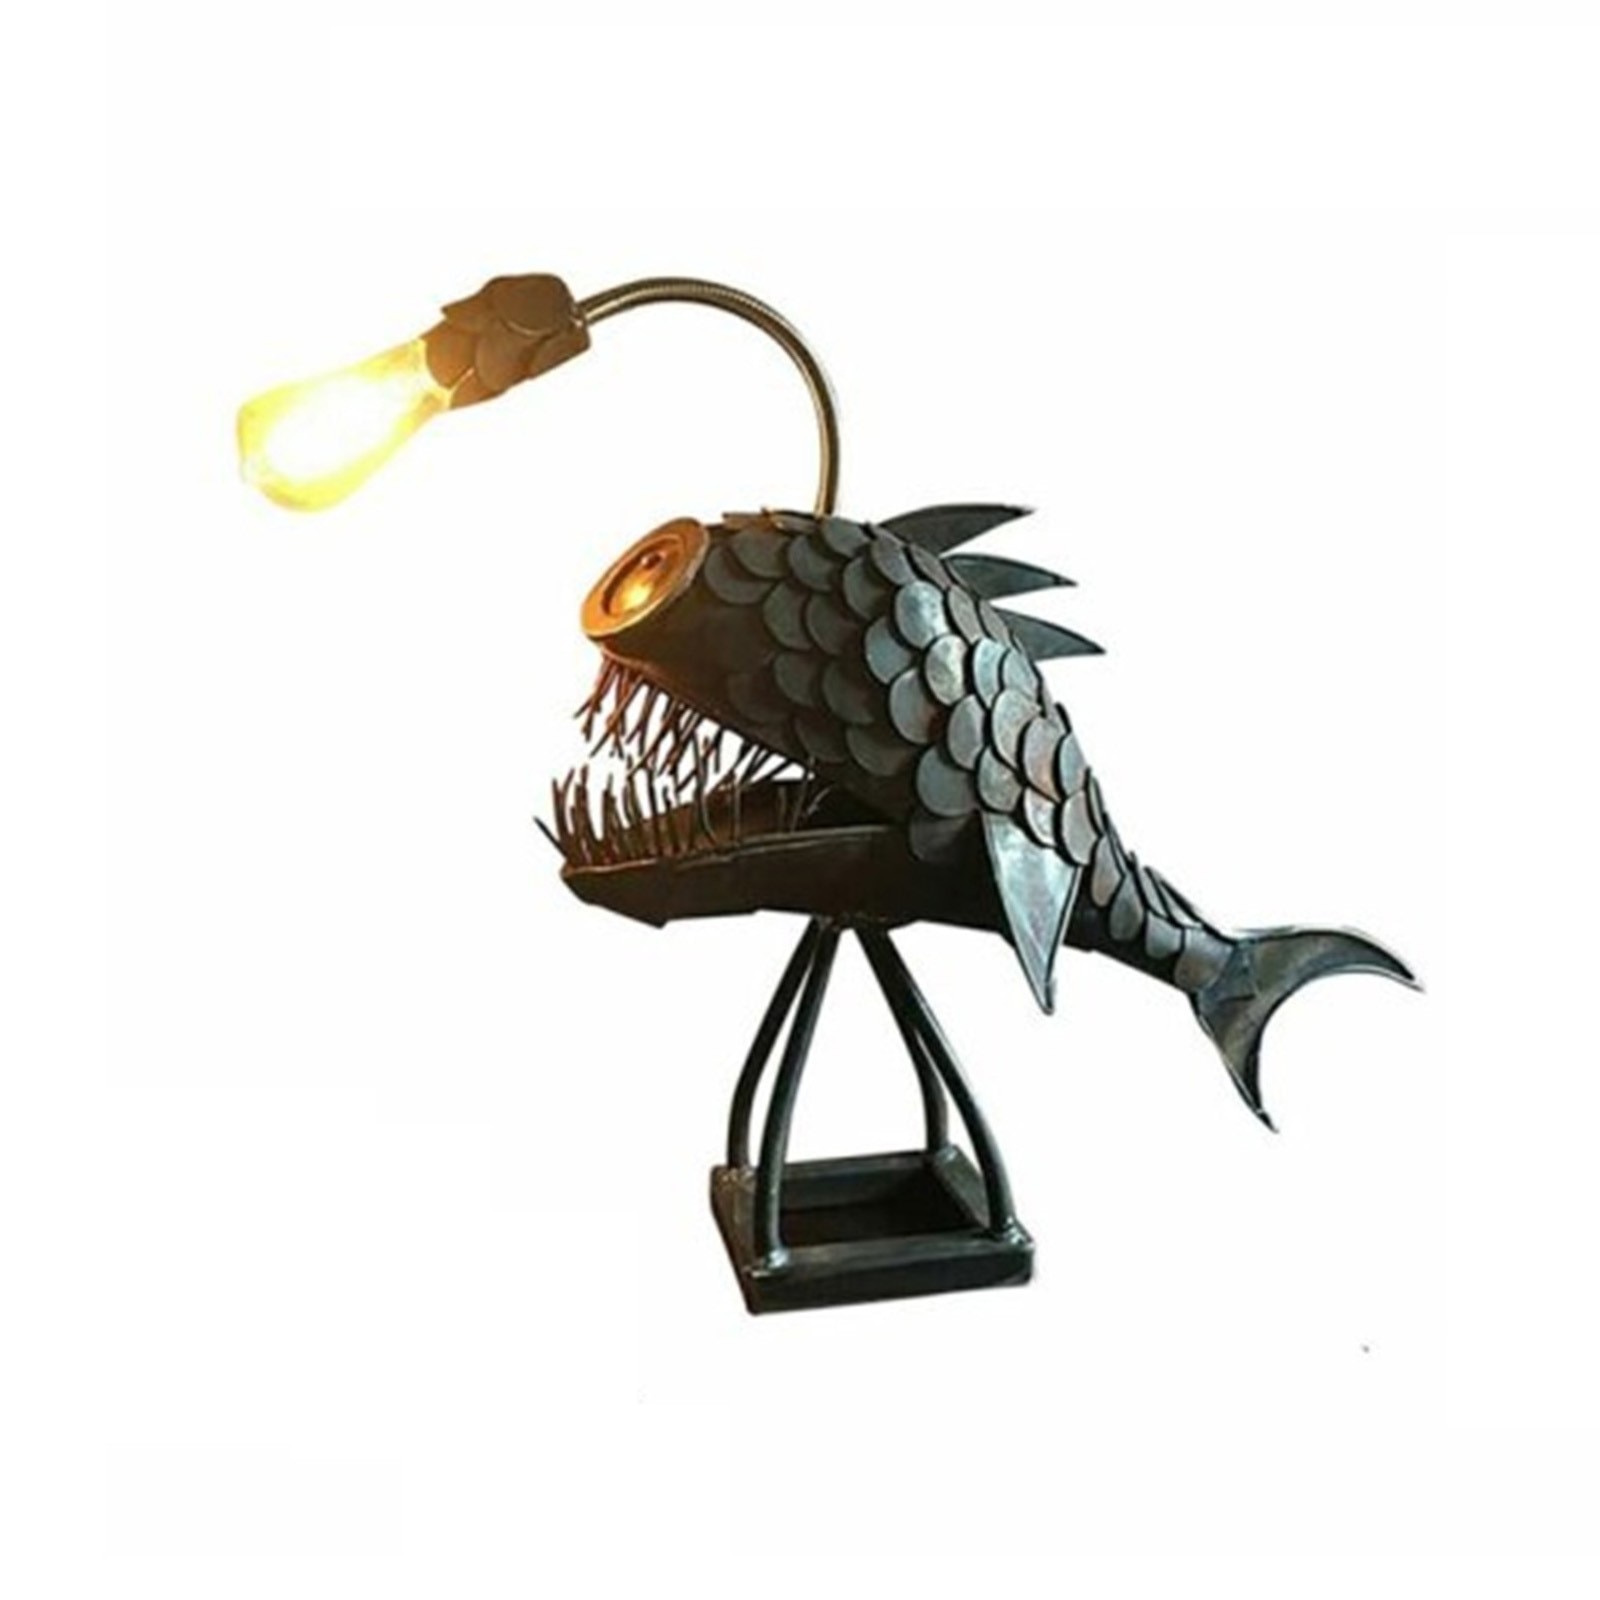 NEW USB Metal Art Lantern Table Decoration Bedroom Home Decoration Gift Creative Angler Fish Desk Lamp Shark Desktop Night Light